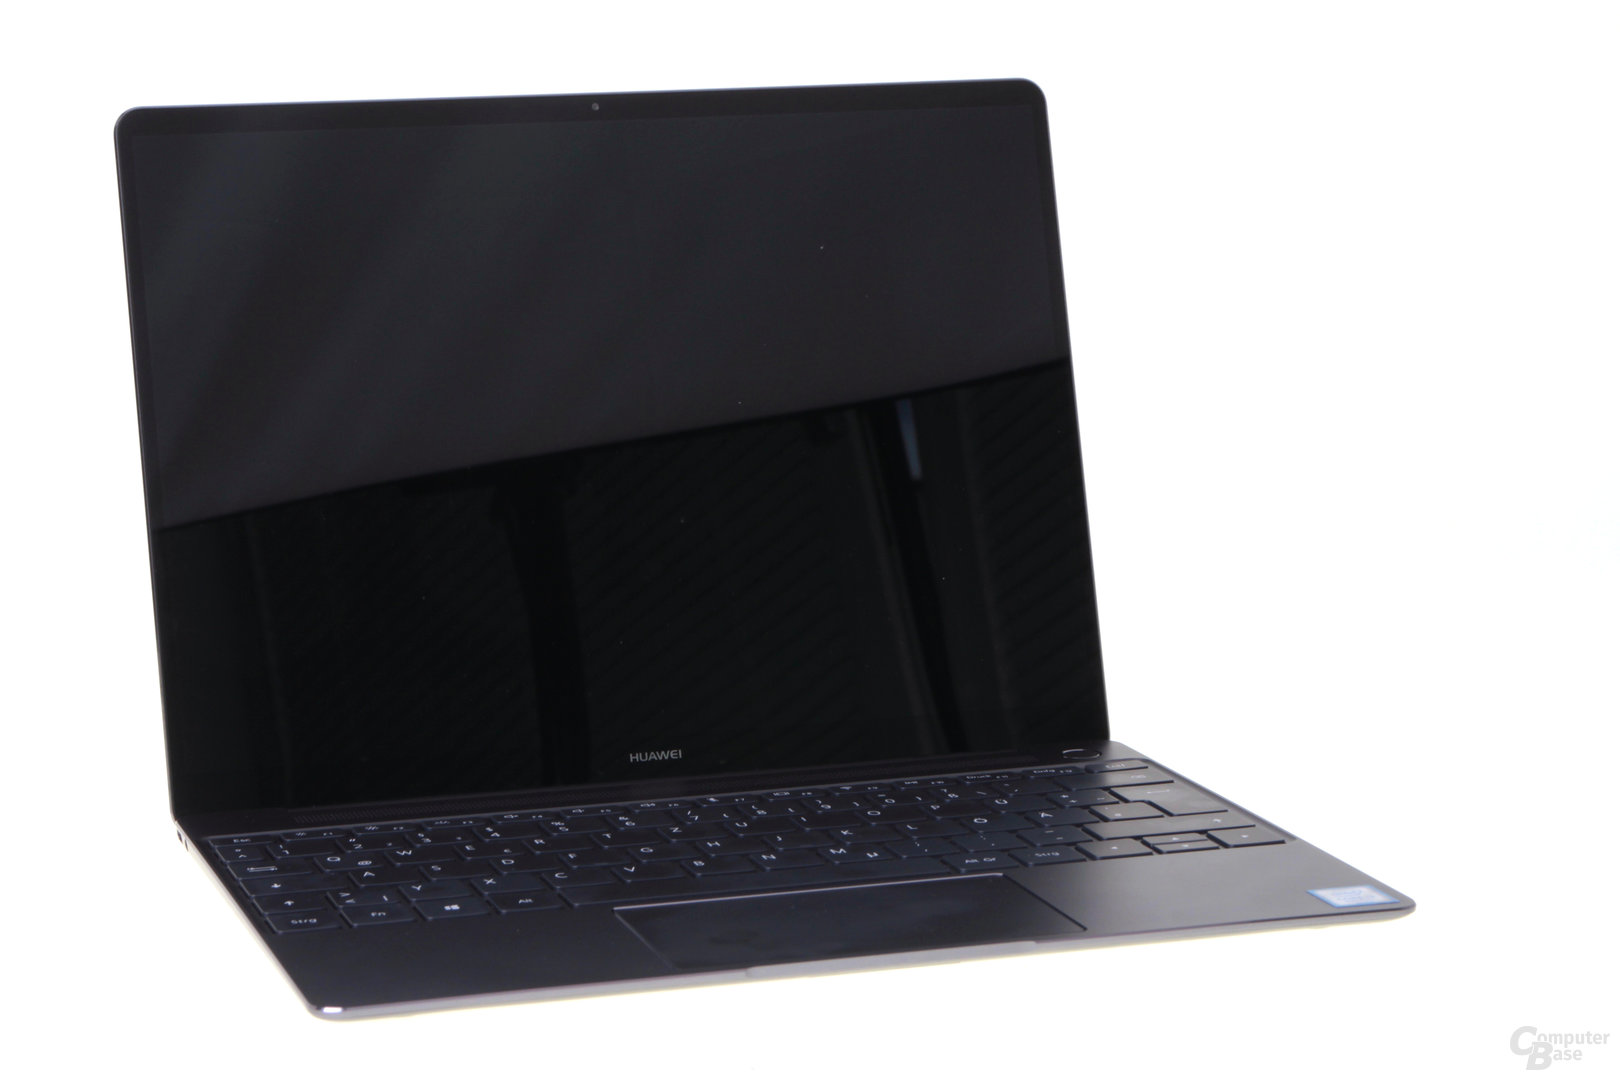 Das MateBook X mit Core i5-7200U im Test